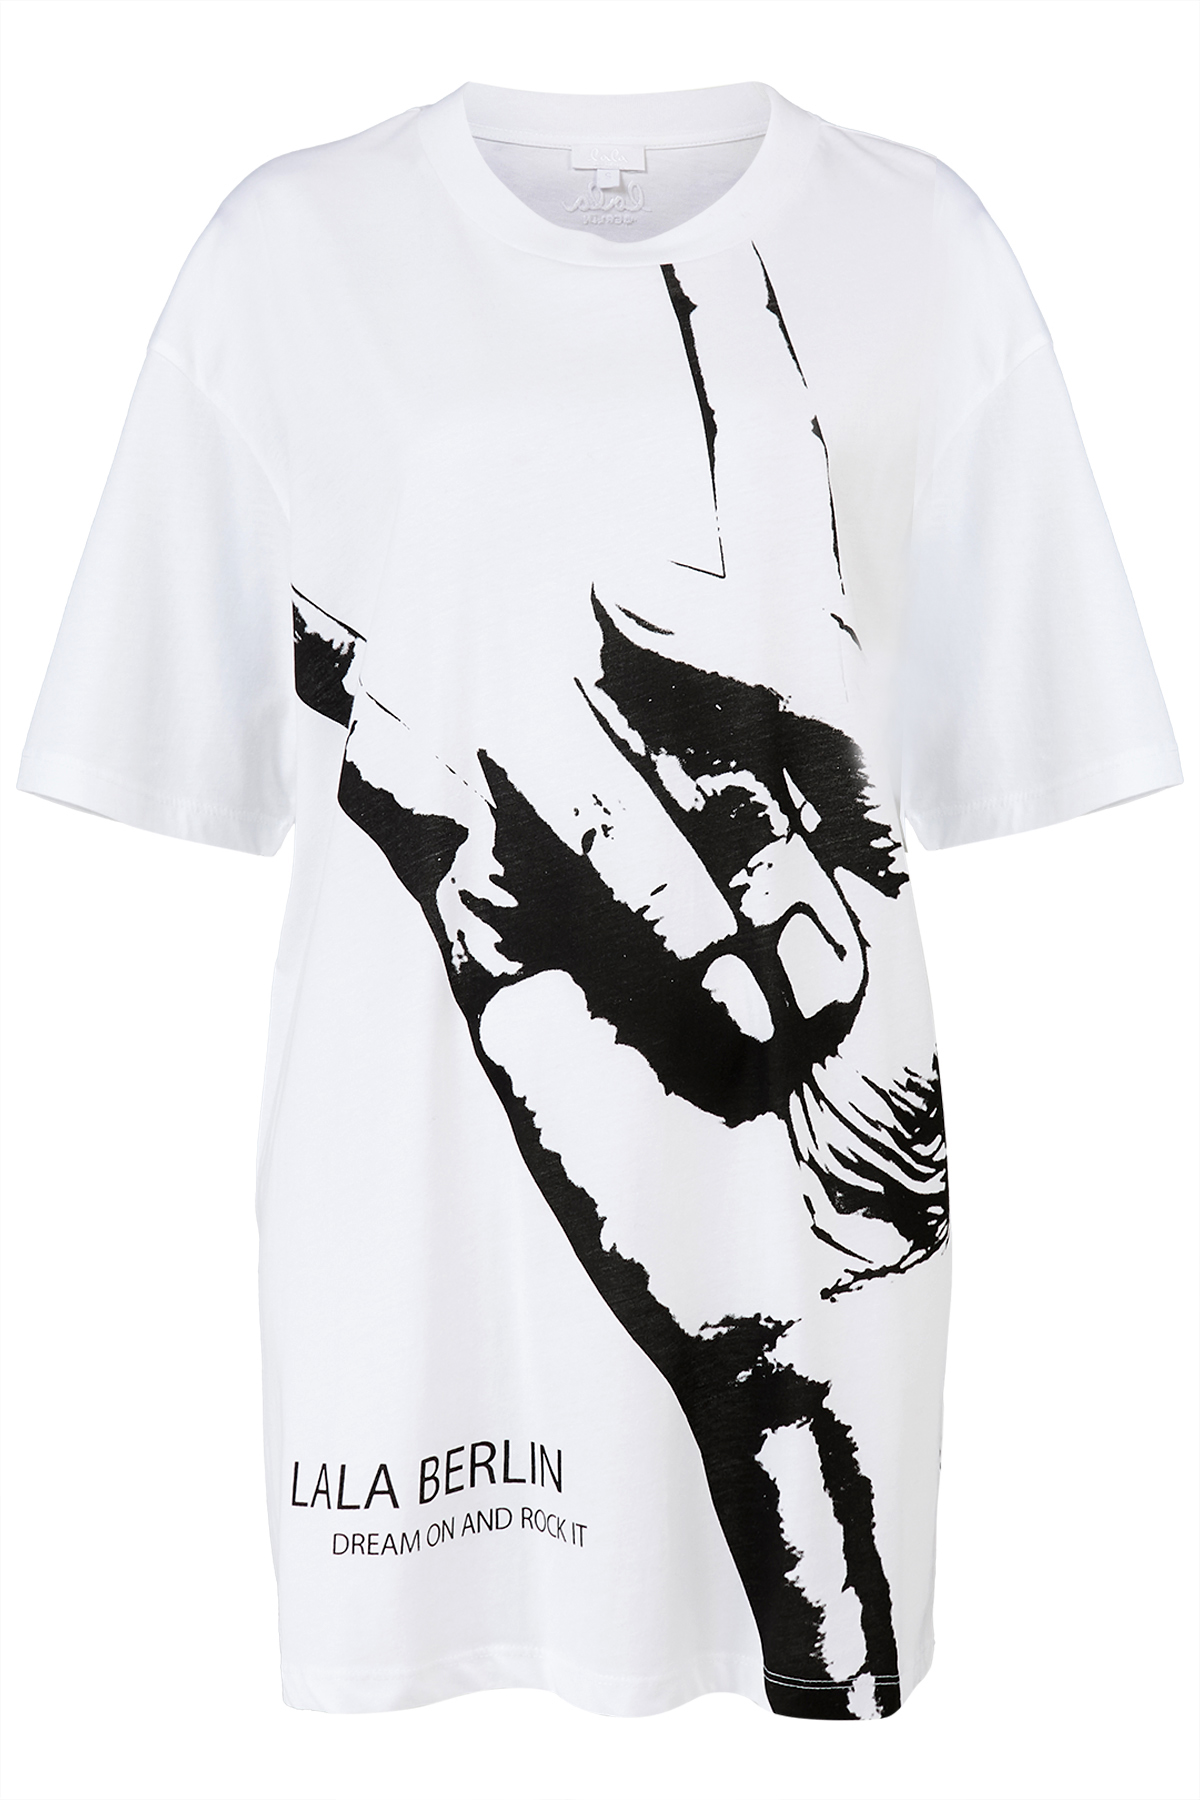 Fange mavepine Tolk T-Shirt Irene Rockhand | LALA BERLIN | myCLASSICO.com